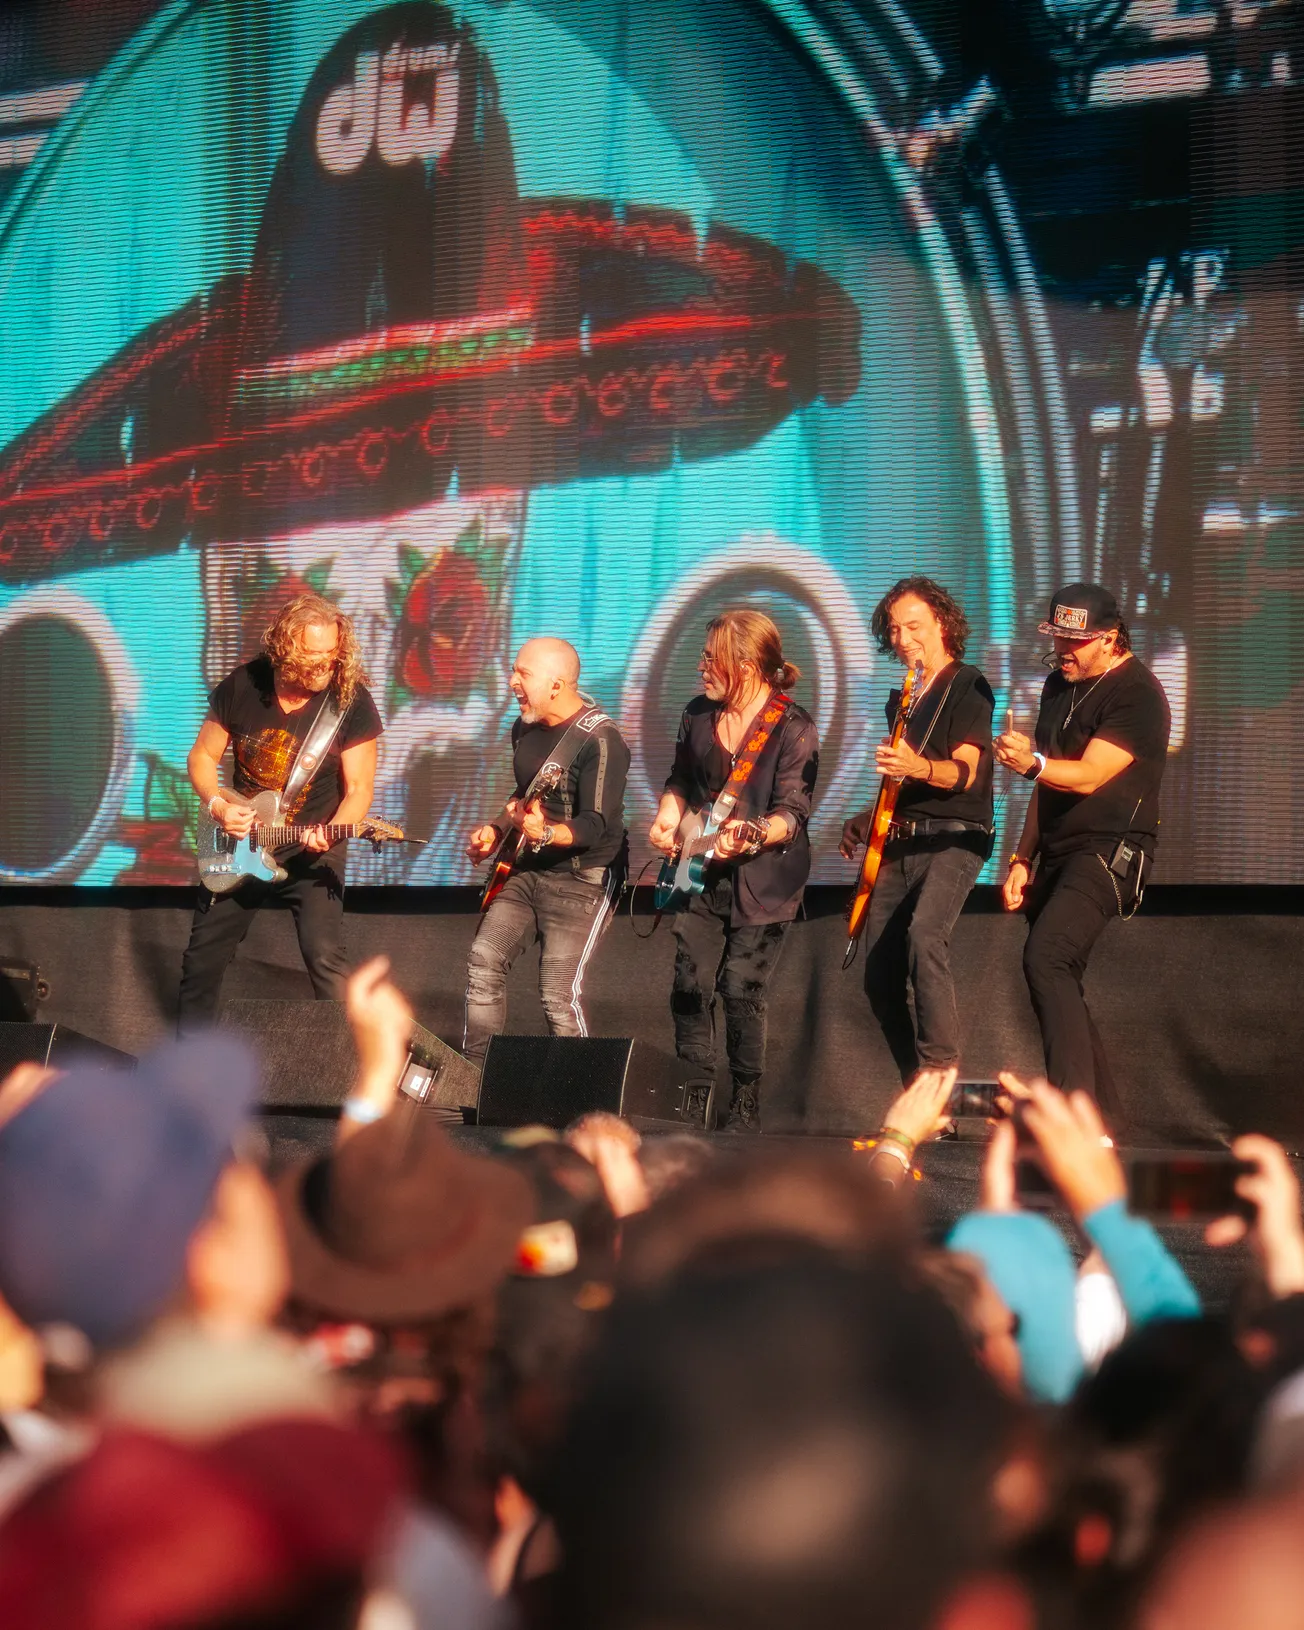 BottleRock organizers tap into the Latino market with Festival La Onda